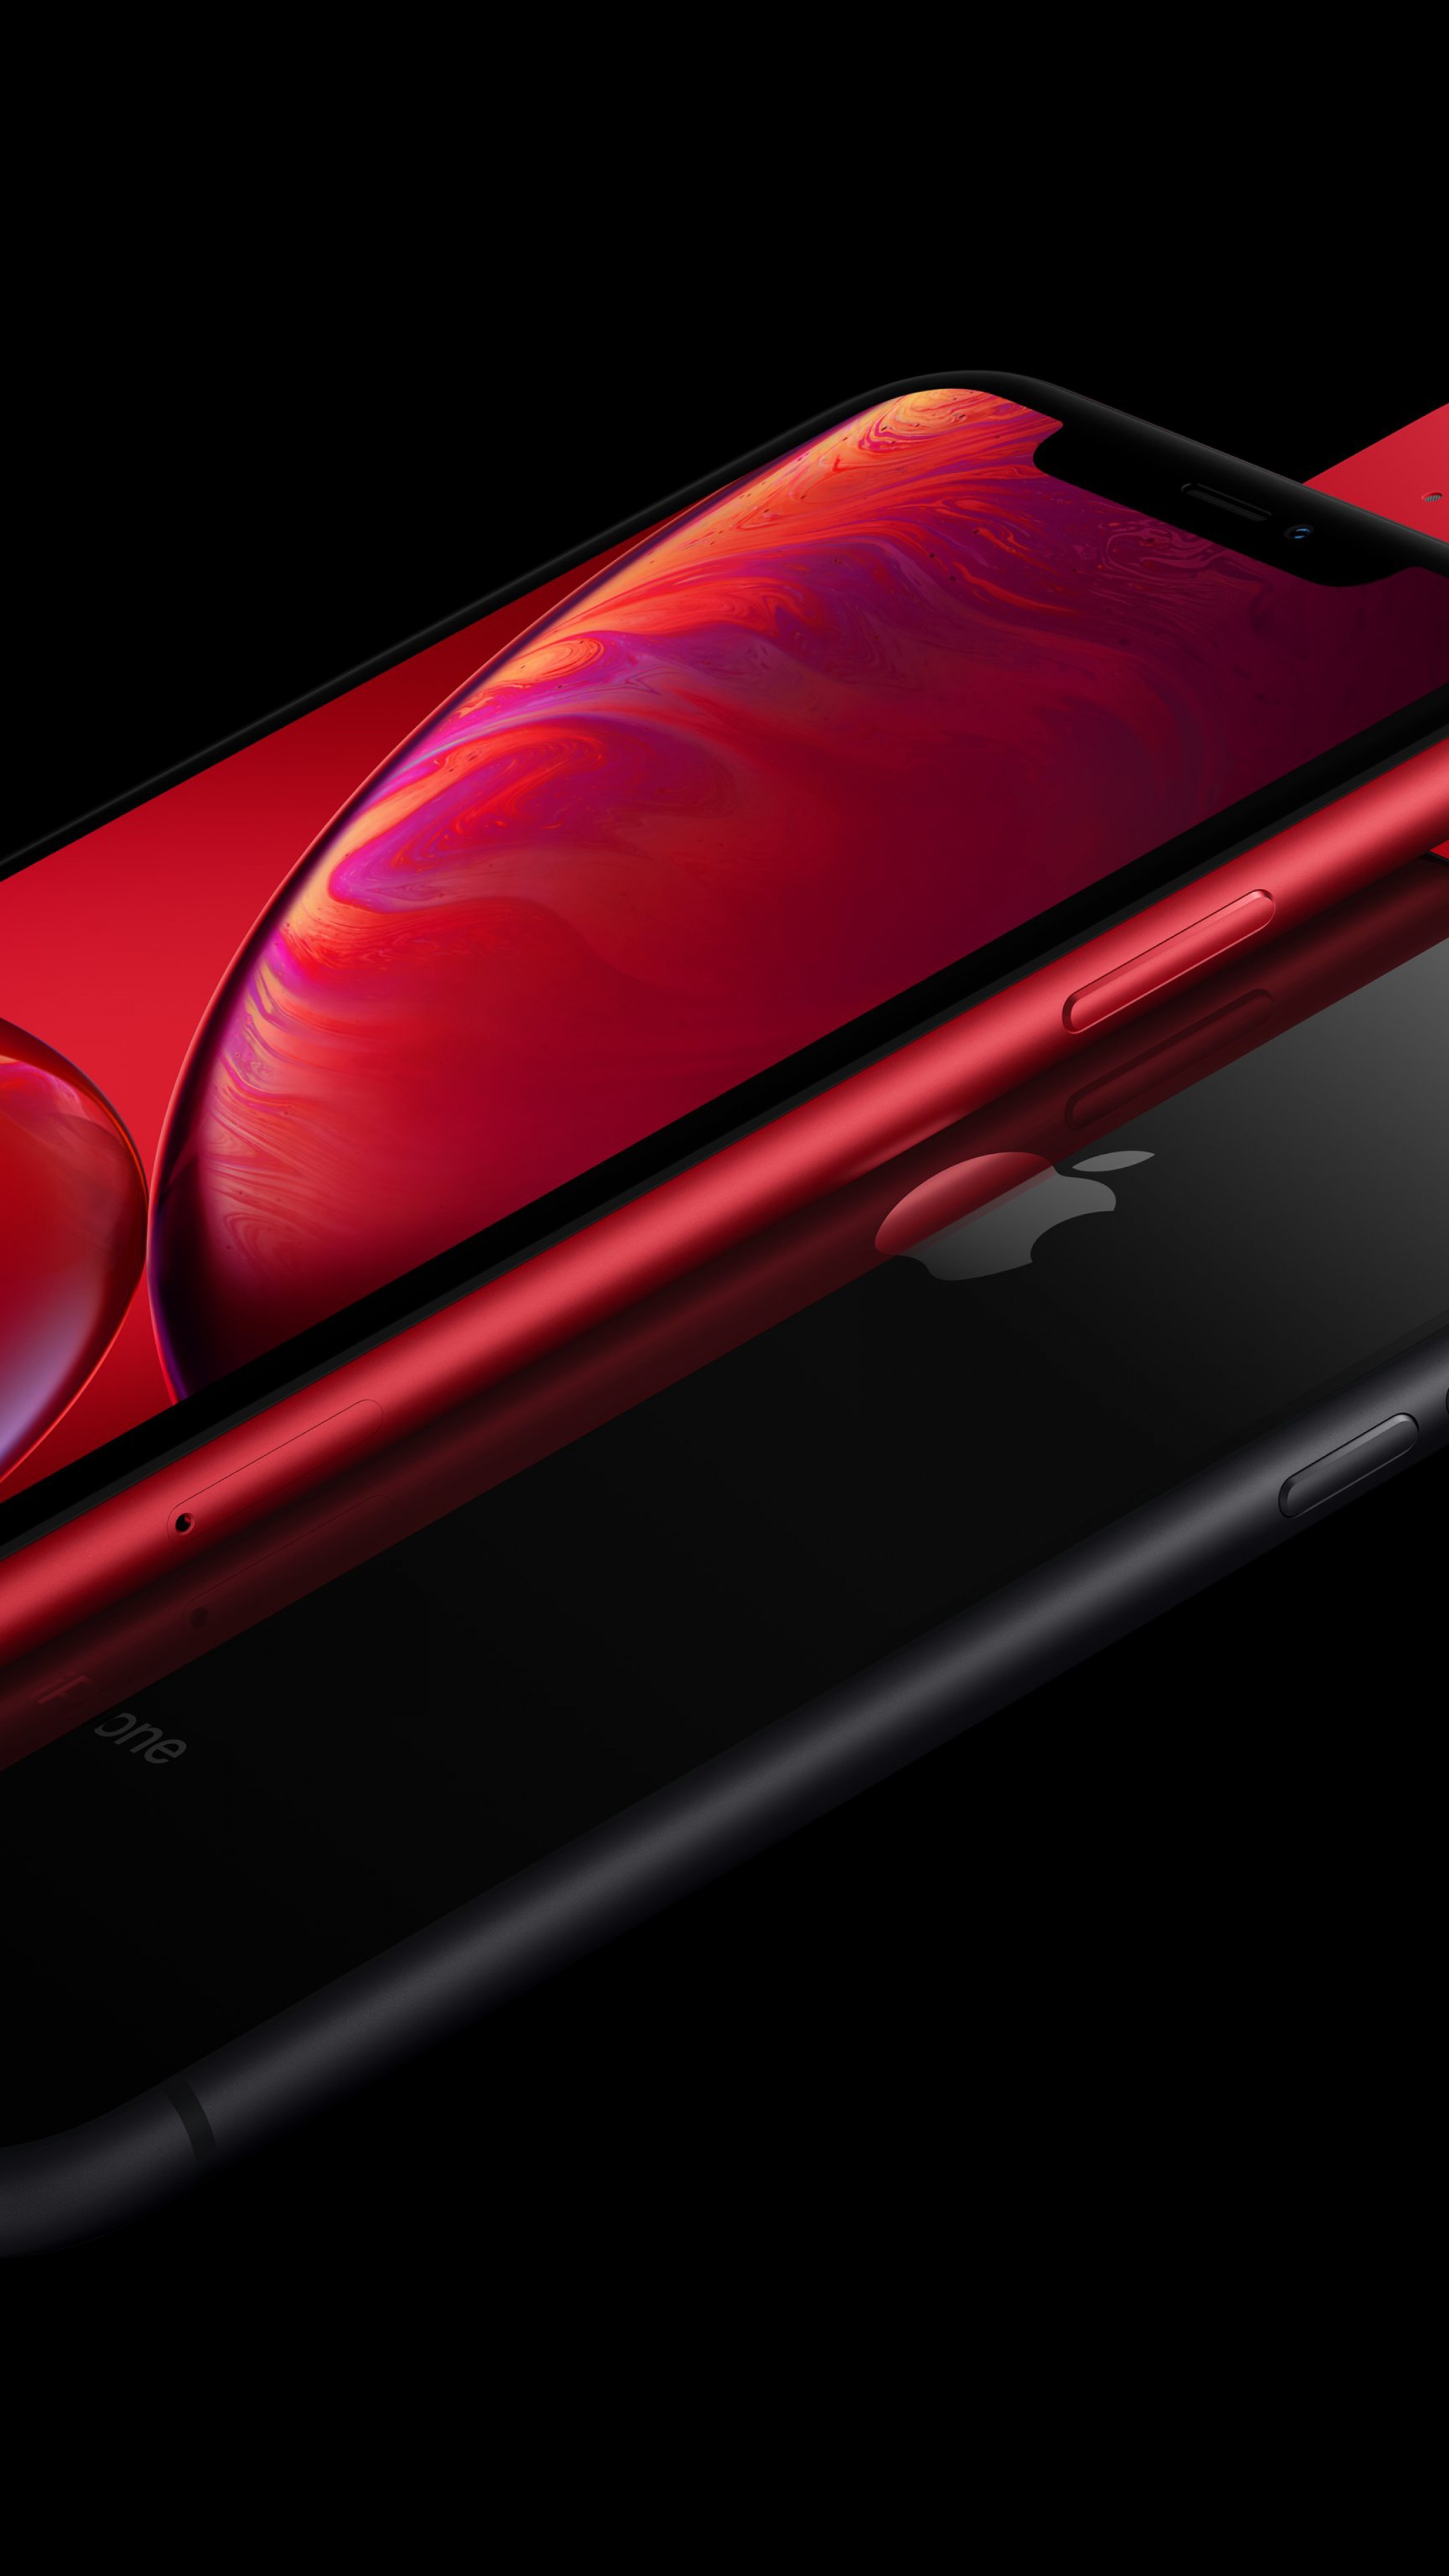 Wallpaper IPhone XR, Red, Black, 5K, Smartphone, Apple September 2018 Event, Hi Tech